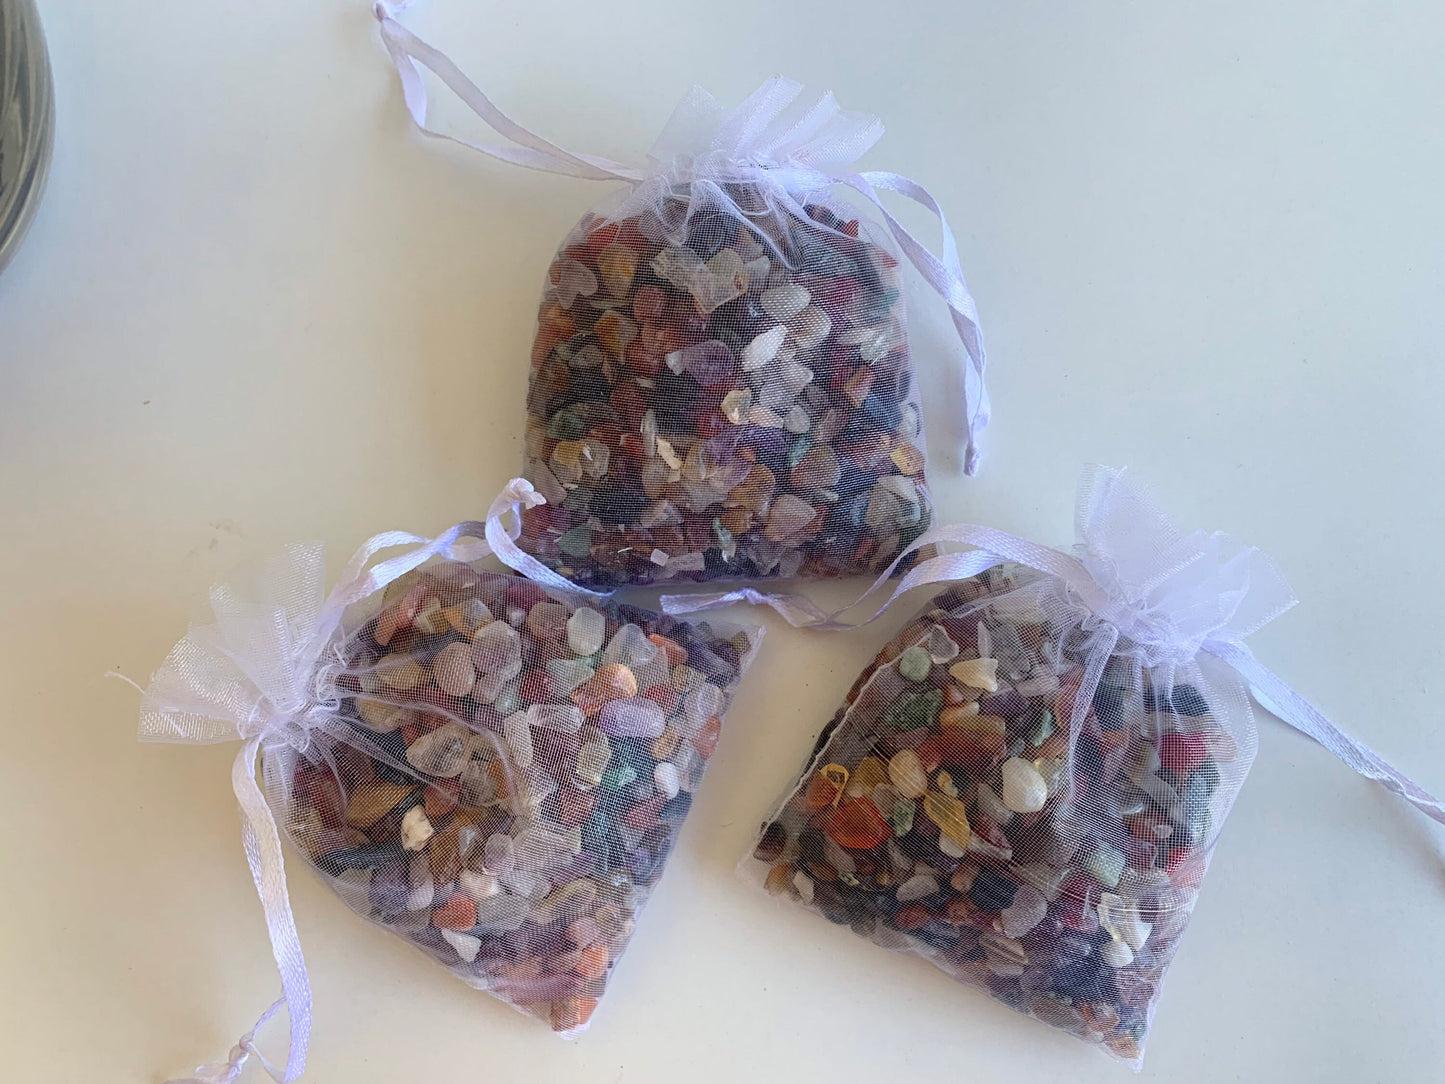 Tiny polished stones (4 oz), rock confetti, colorful planter stones, tiny rocks, craft rocks, assorted